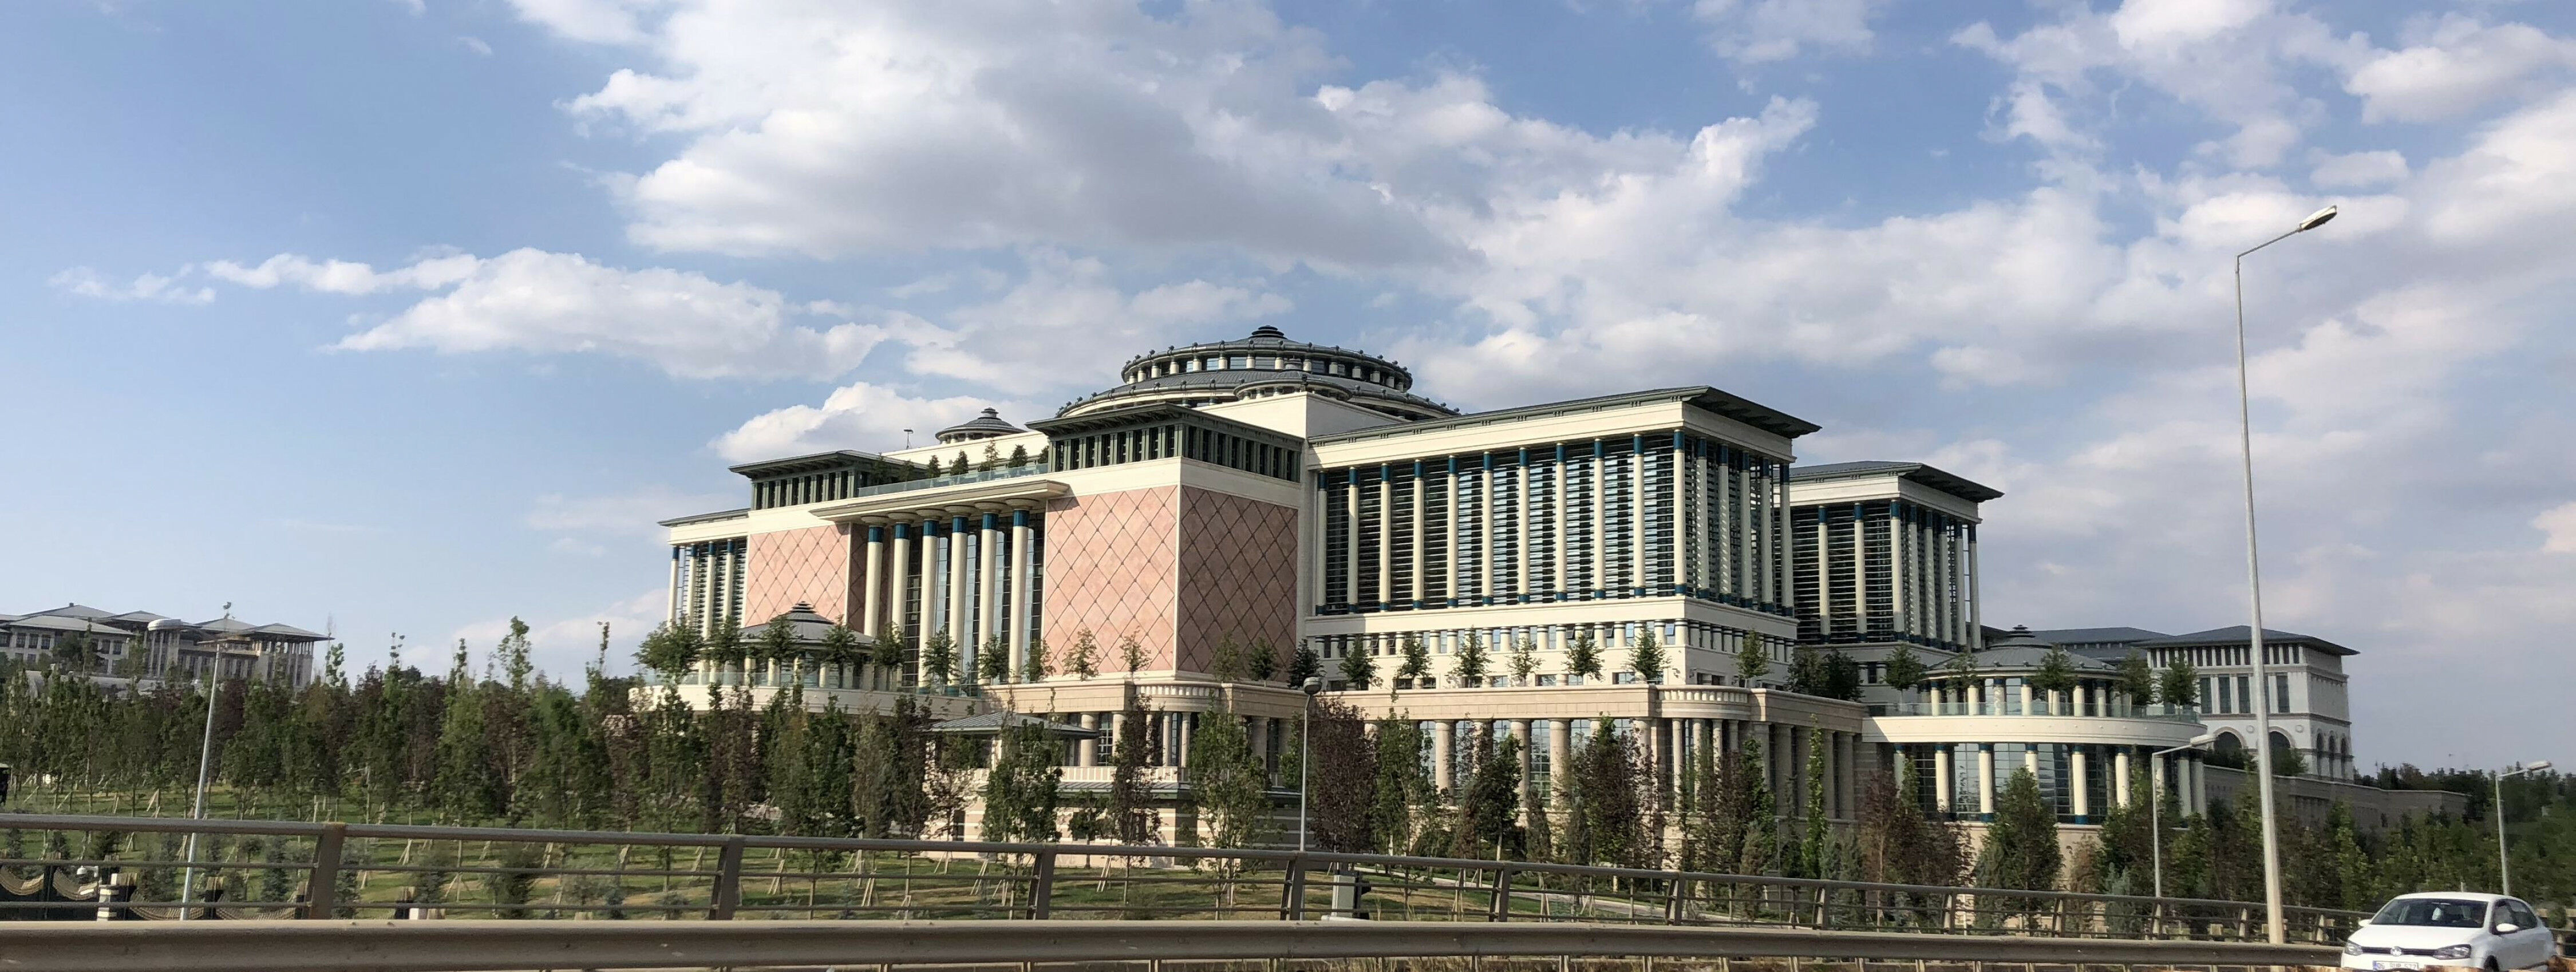 Library of the nation, Ankara